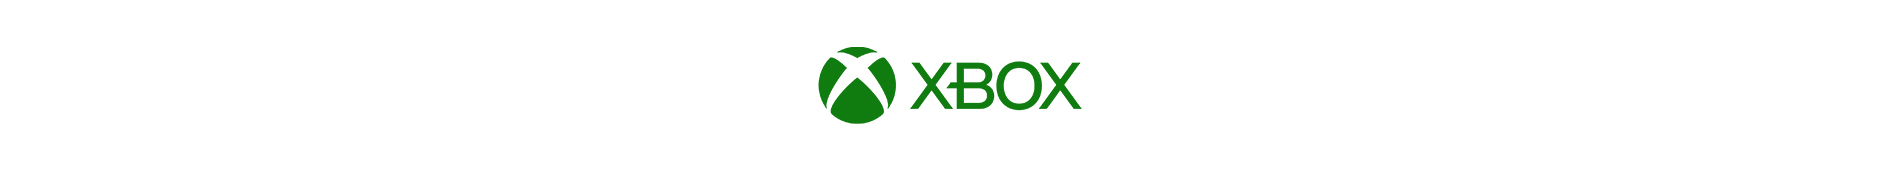 Microsoft Xbox One General Nav Buttons  Btm Banner Tile 16